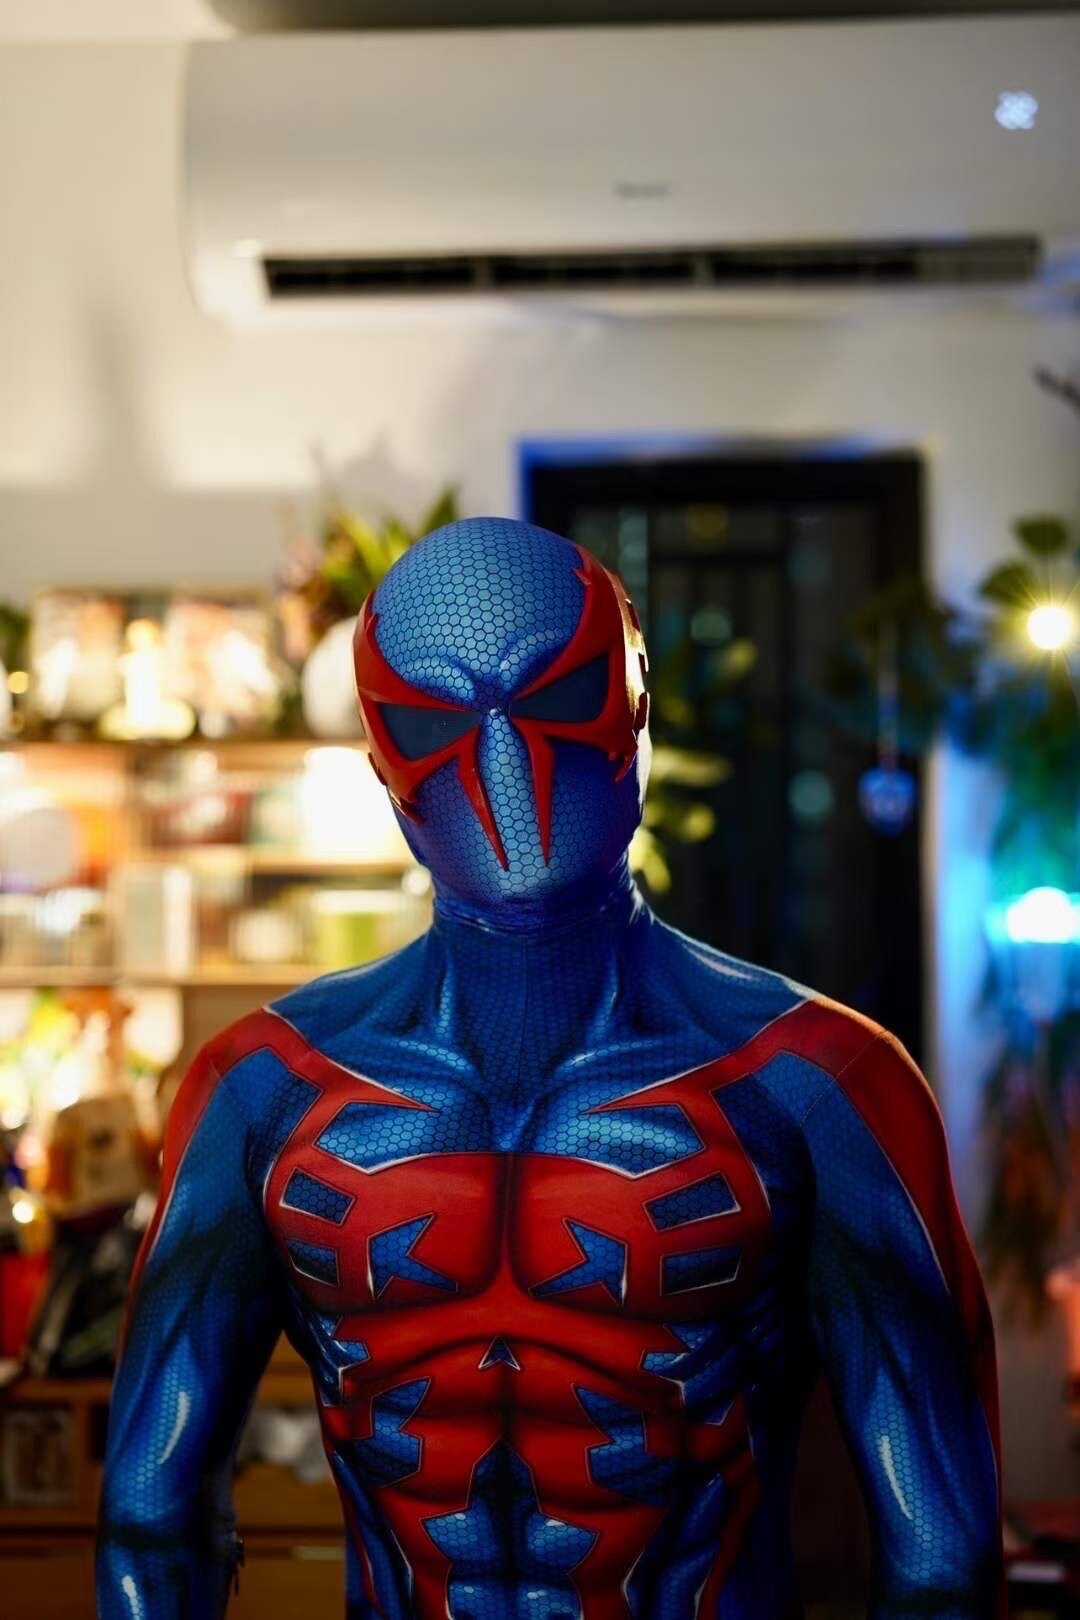 Spider man 2099 cosplay costume